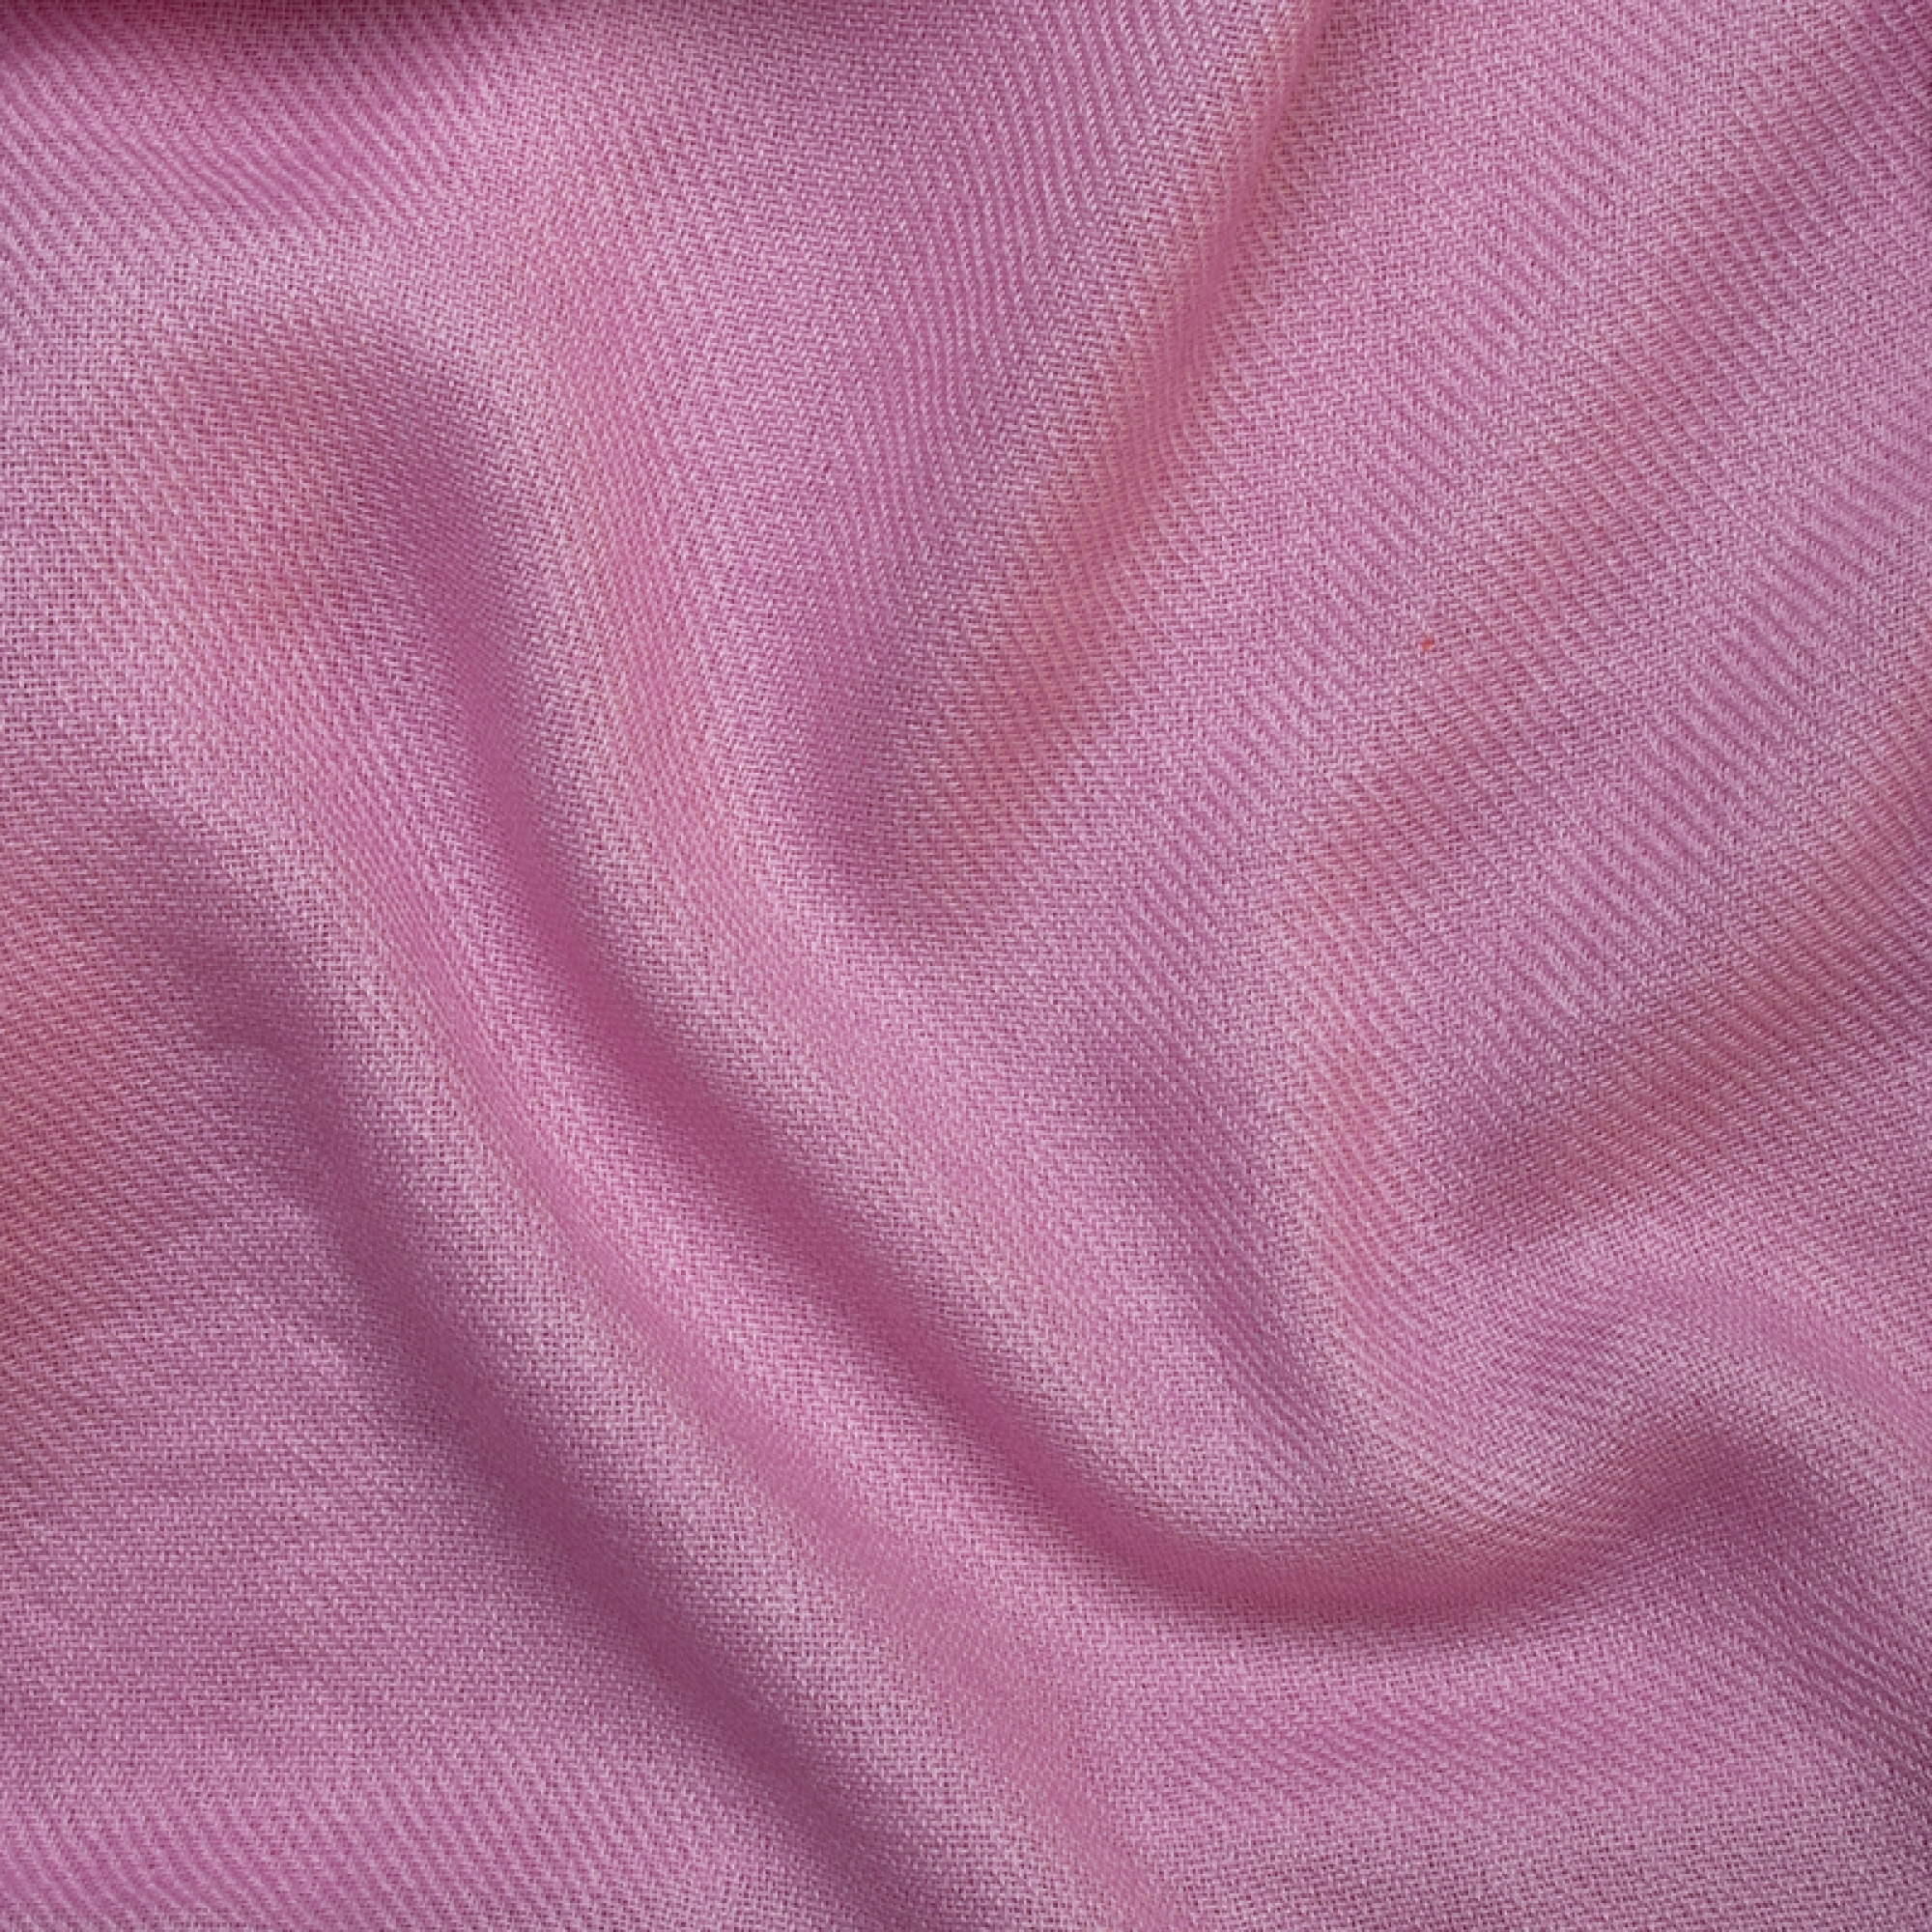 Cashmere accessories blanket toodoo plain m 180 x 220 pink lavender 180 x 220 cm